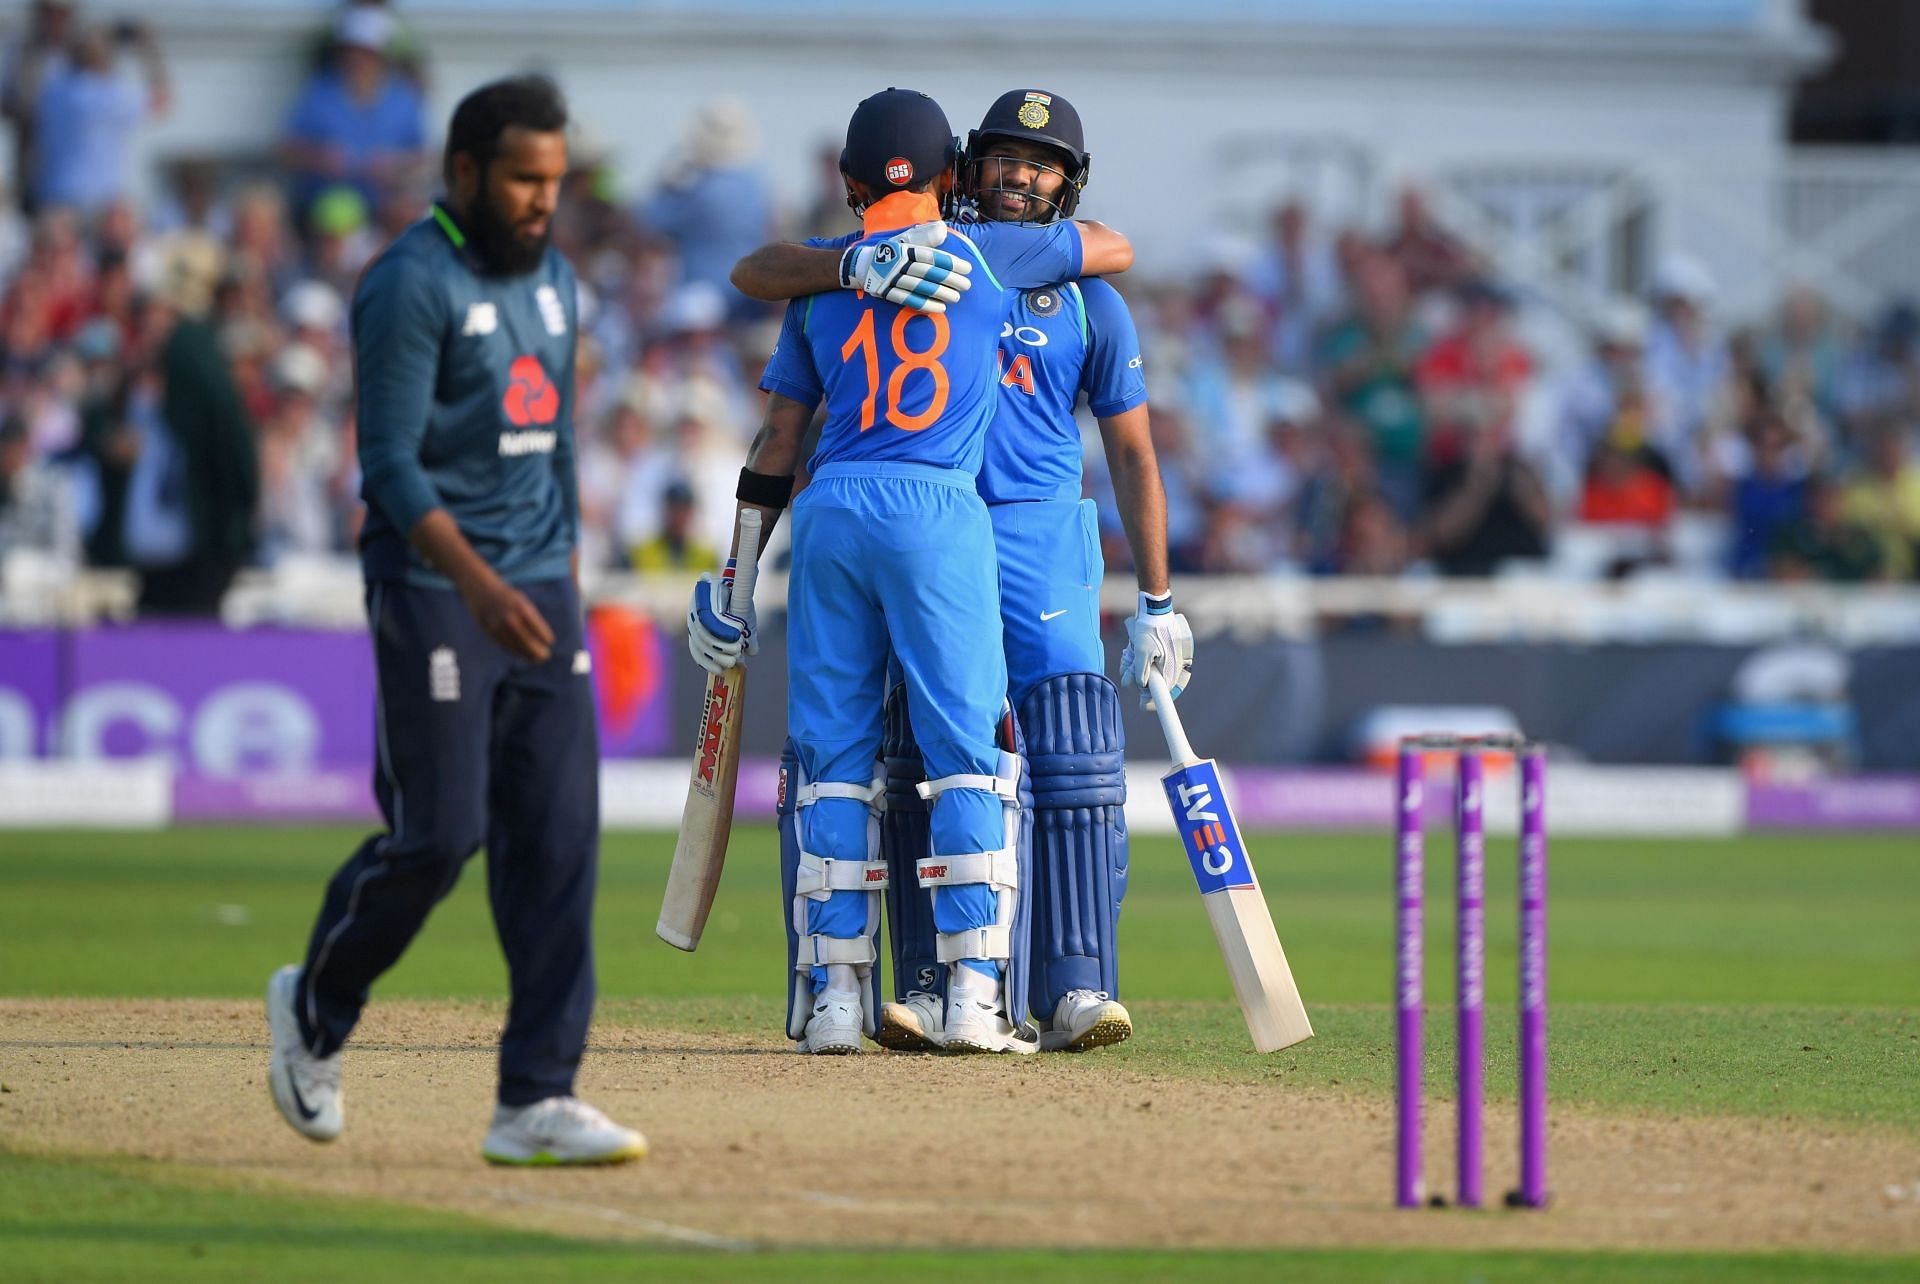 England v India - 1st ODI: Royal London One-Day Series